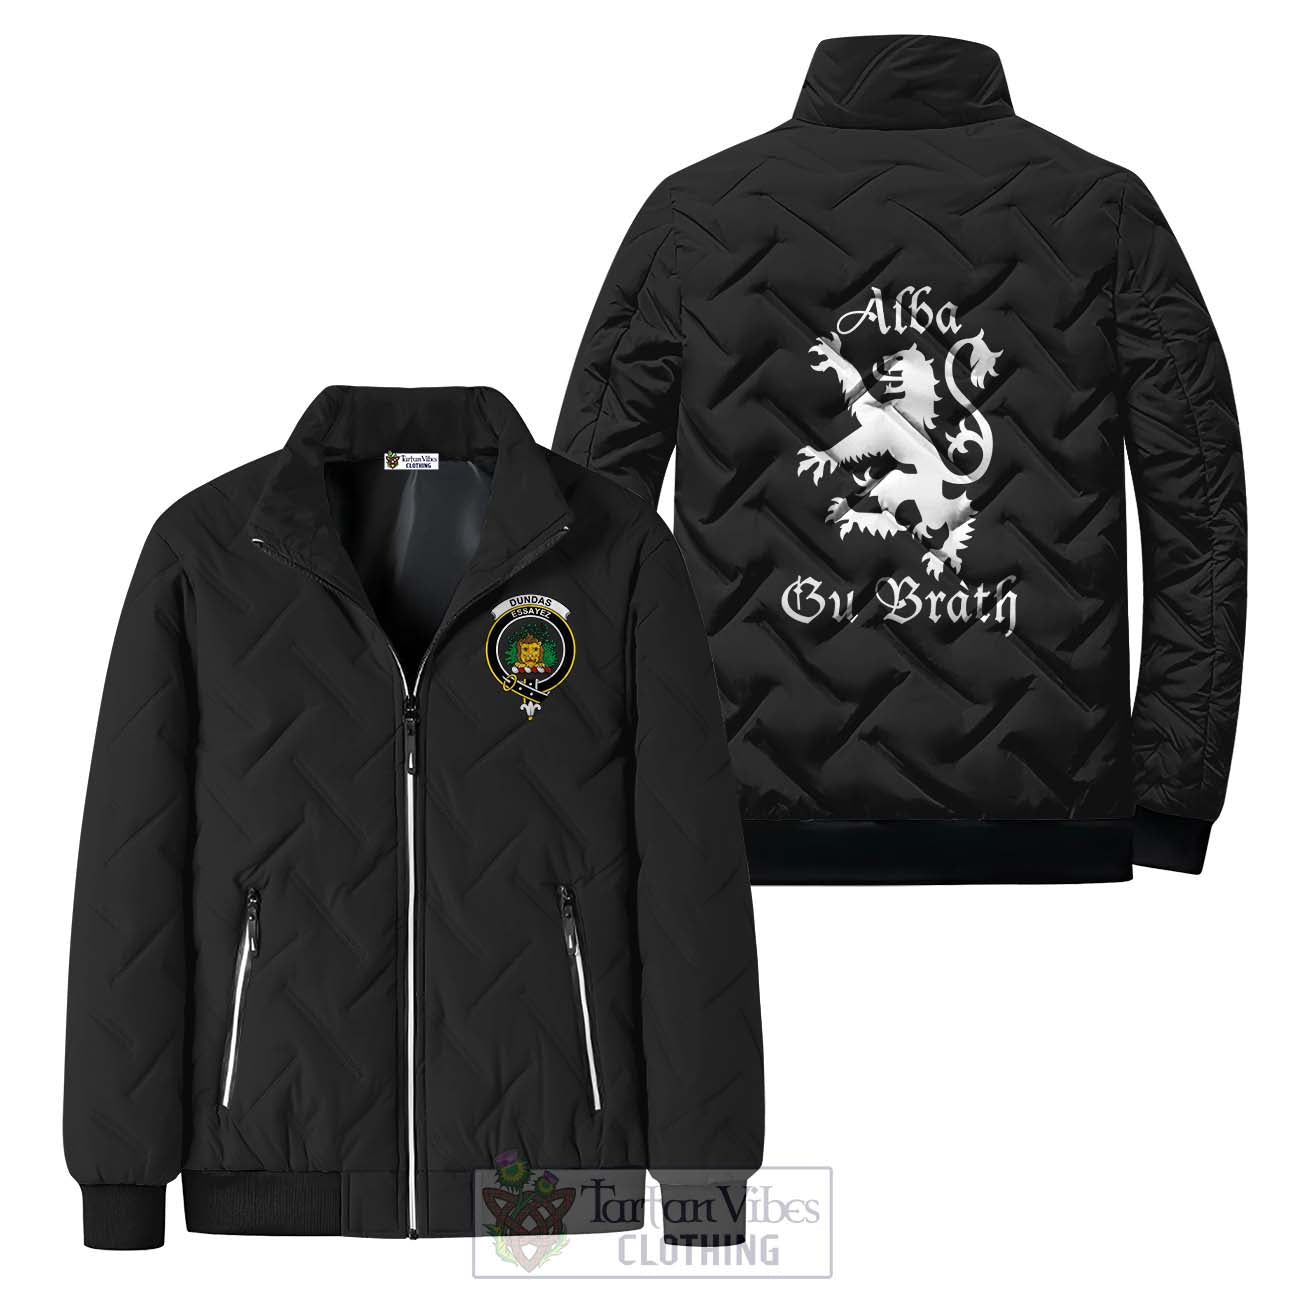 Tartan Vibes Clothing Dundas Family Crest Padded Cotton Jacket Lion Rampant Alba Gu Brath Style